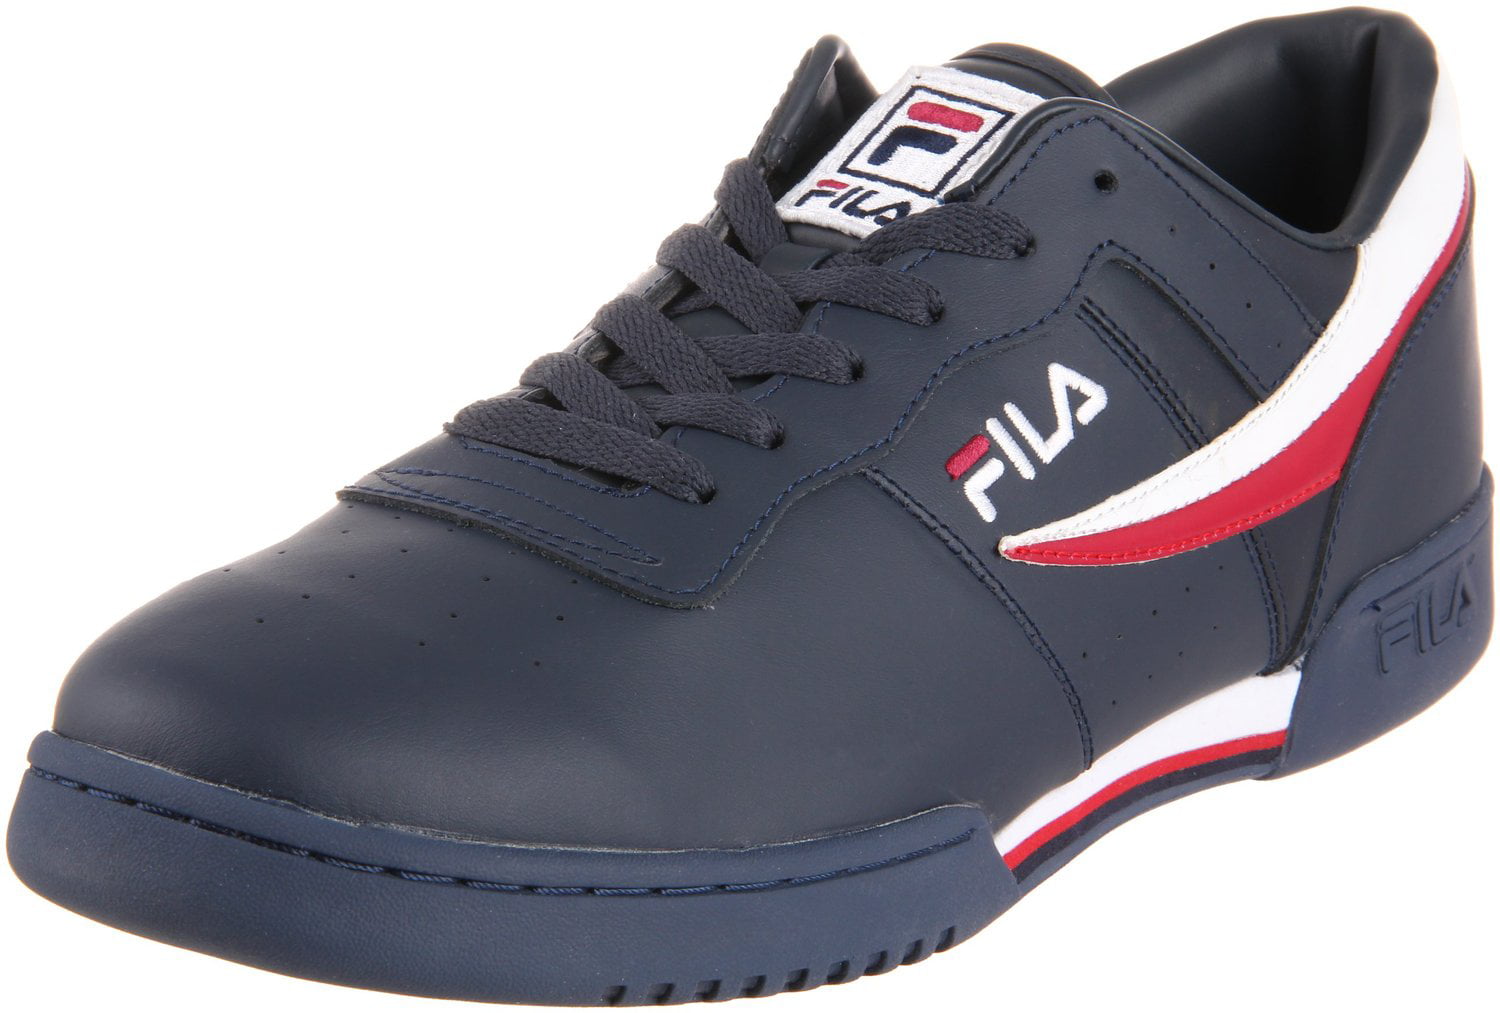 Fila Men's Original Vintage Fitness Shoe,Navy/White/Red,8.5 M - Walmart.com